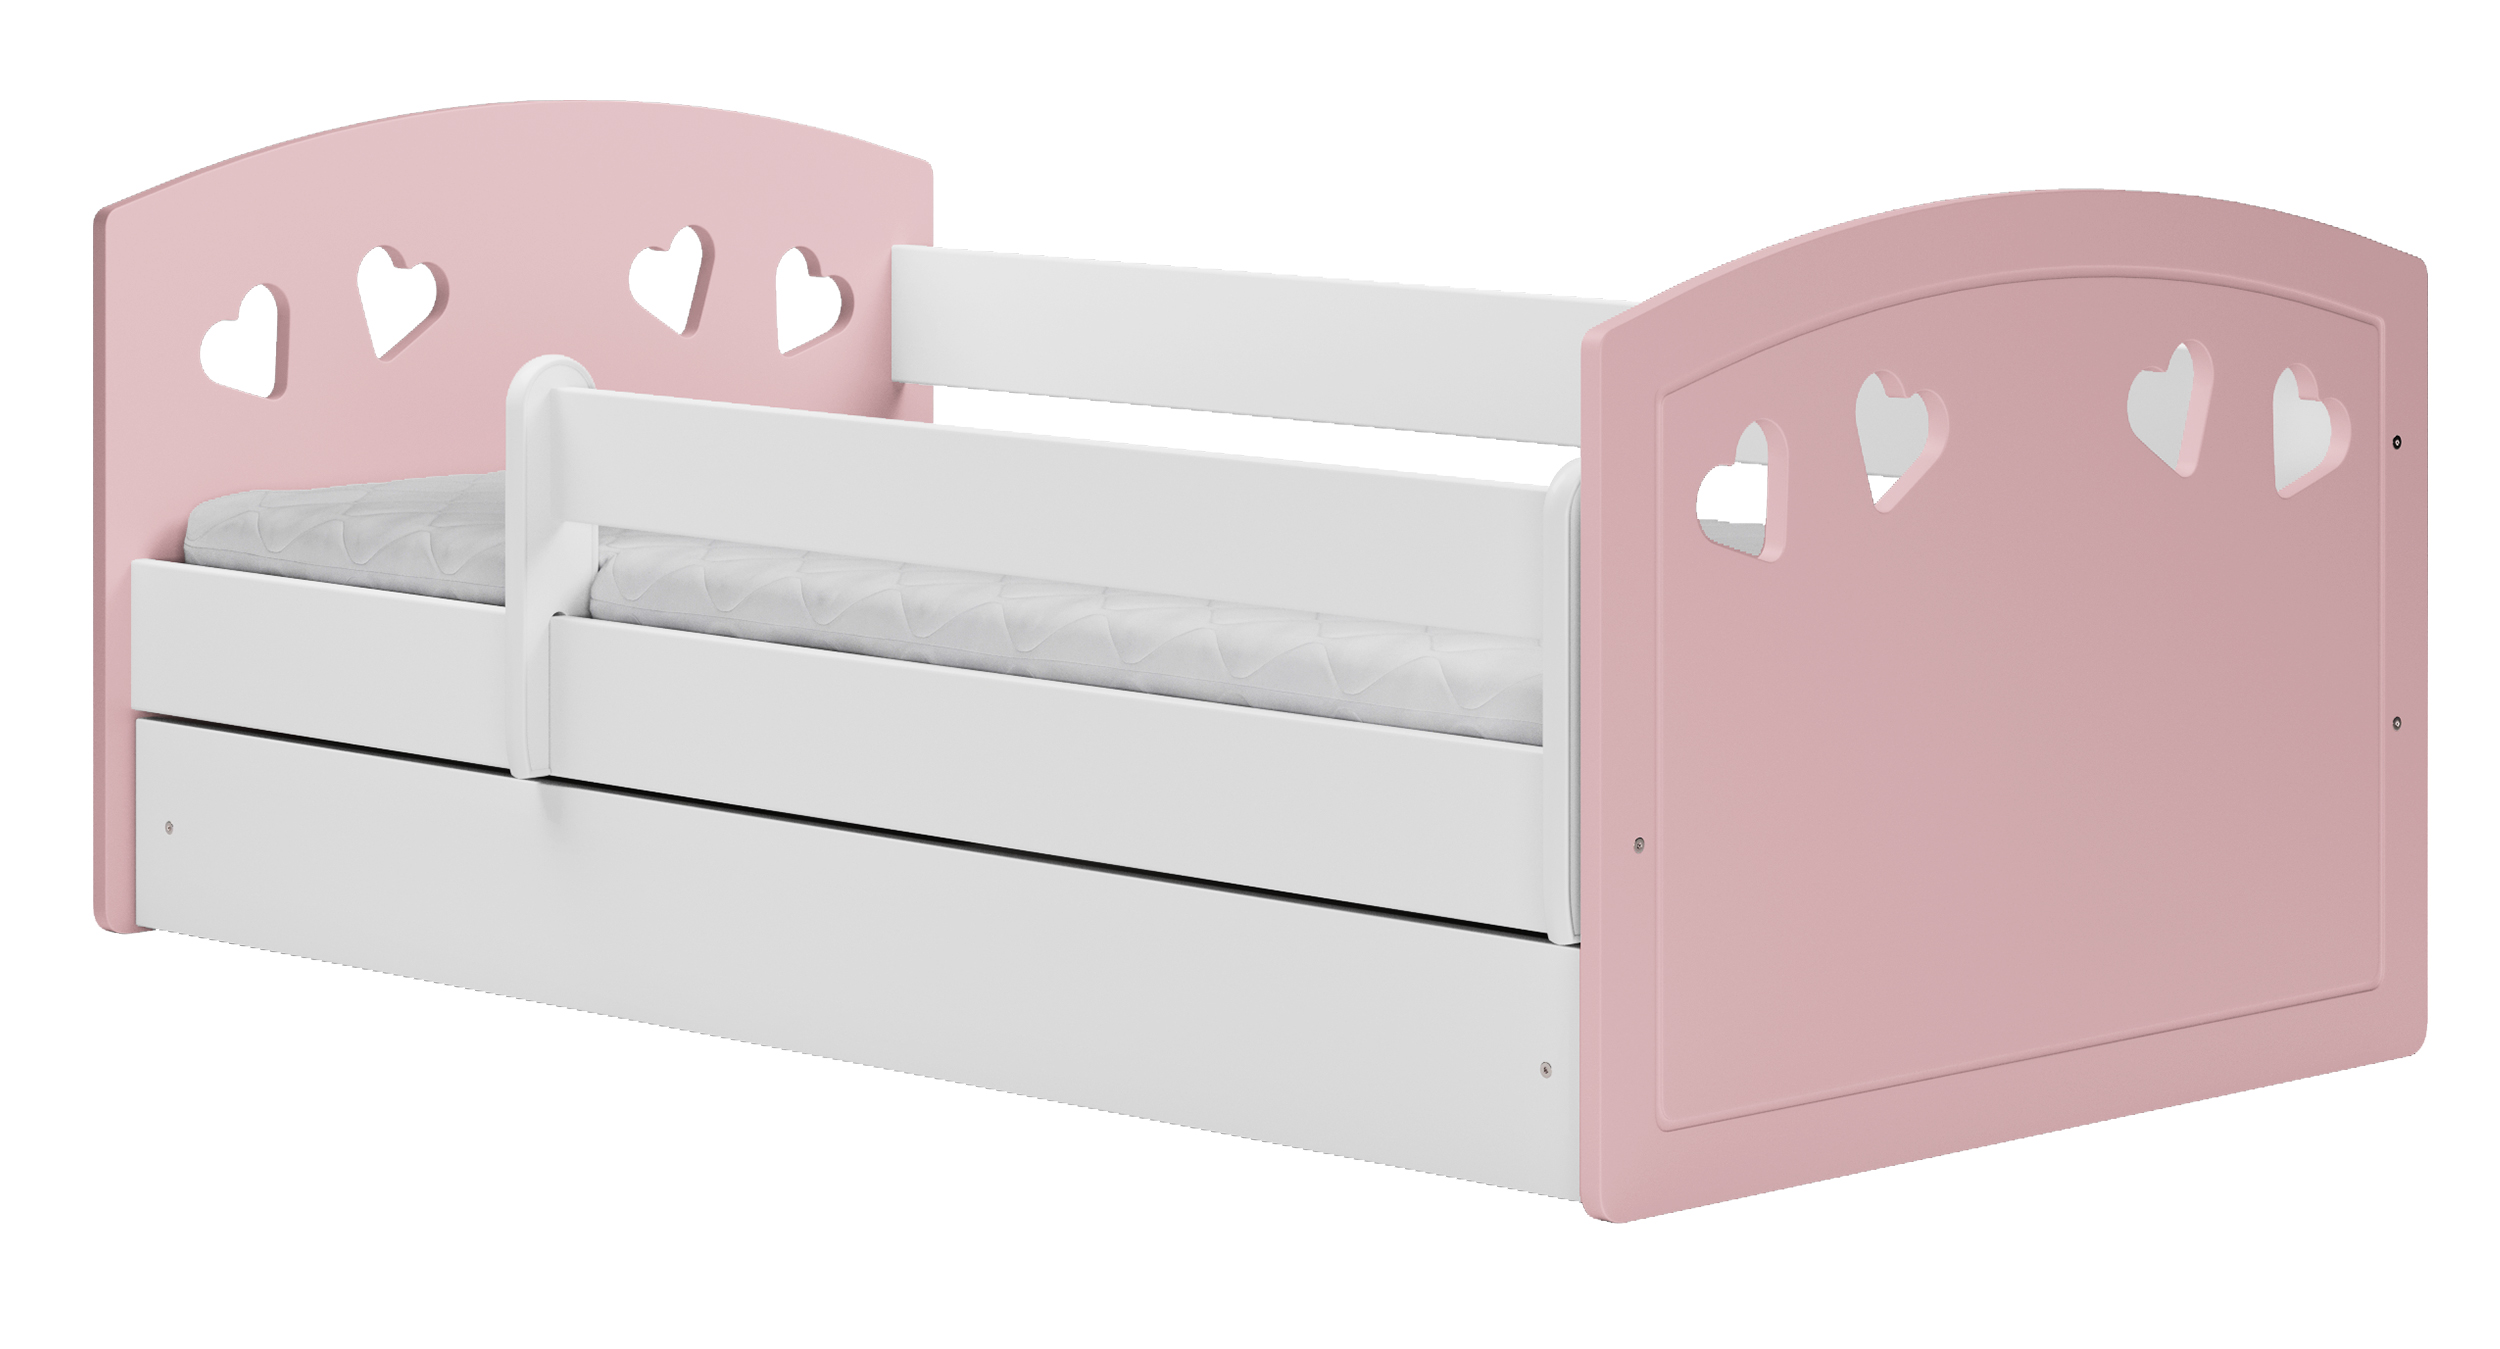 Kinderbett DERATA in Weiß/Puderrosa mit Rausfallschutz